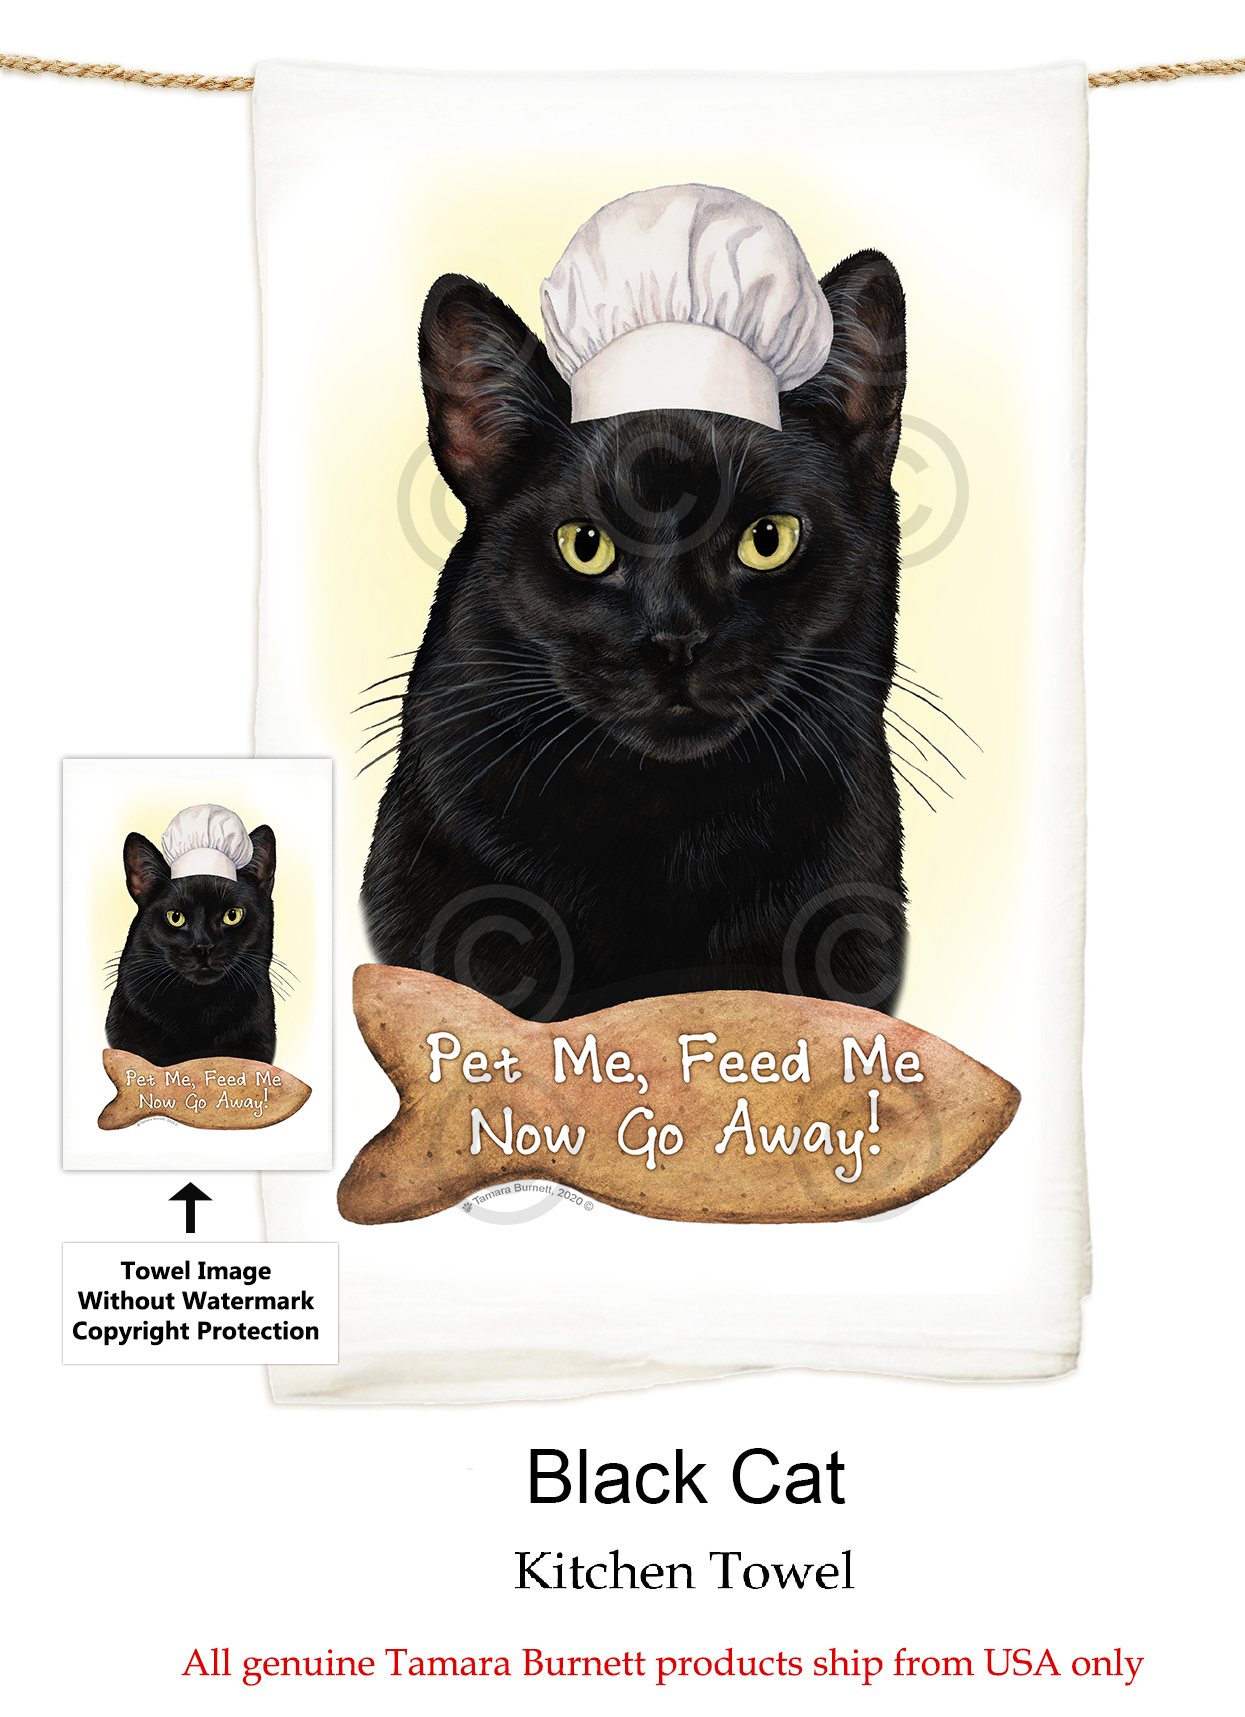 Black Cat - Flour Sack Towel image sized 1245 x 1717